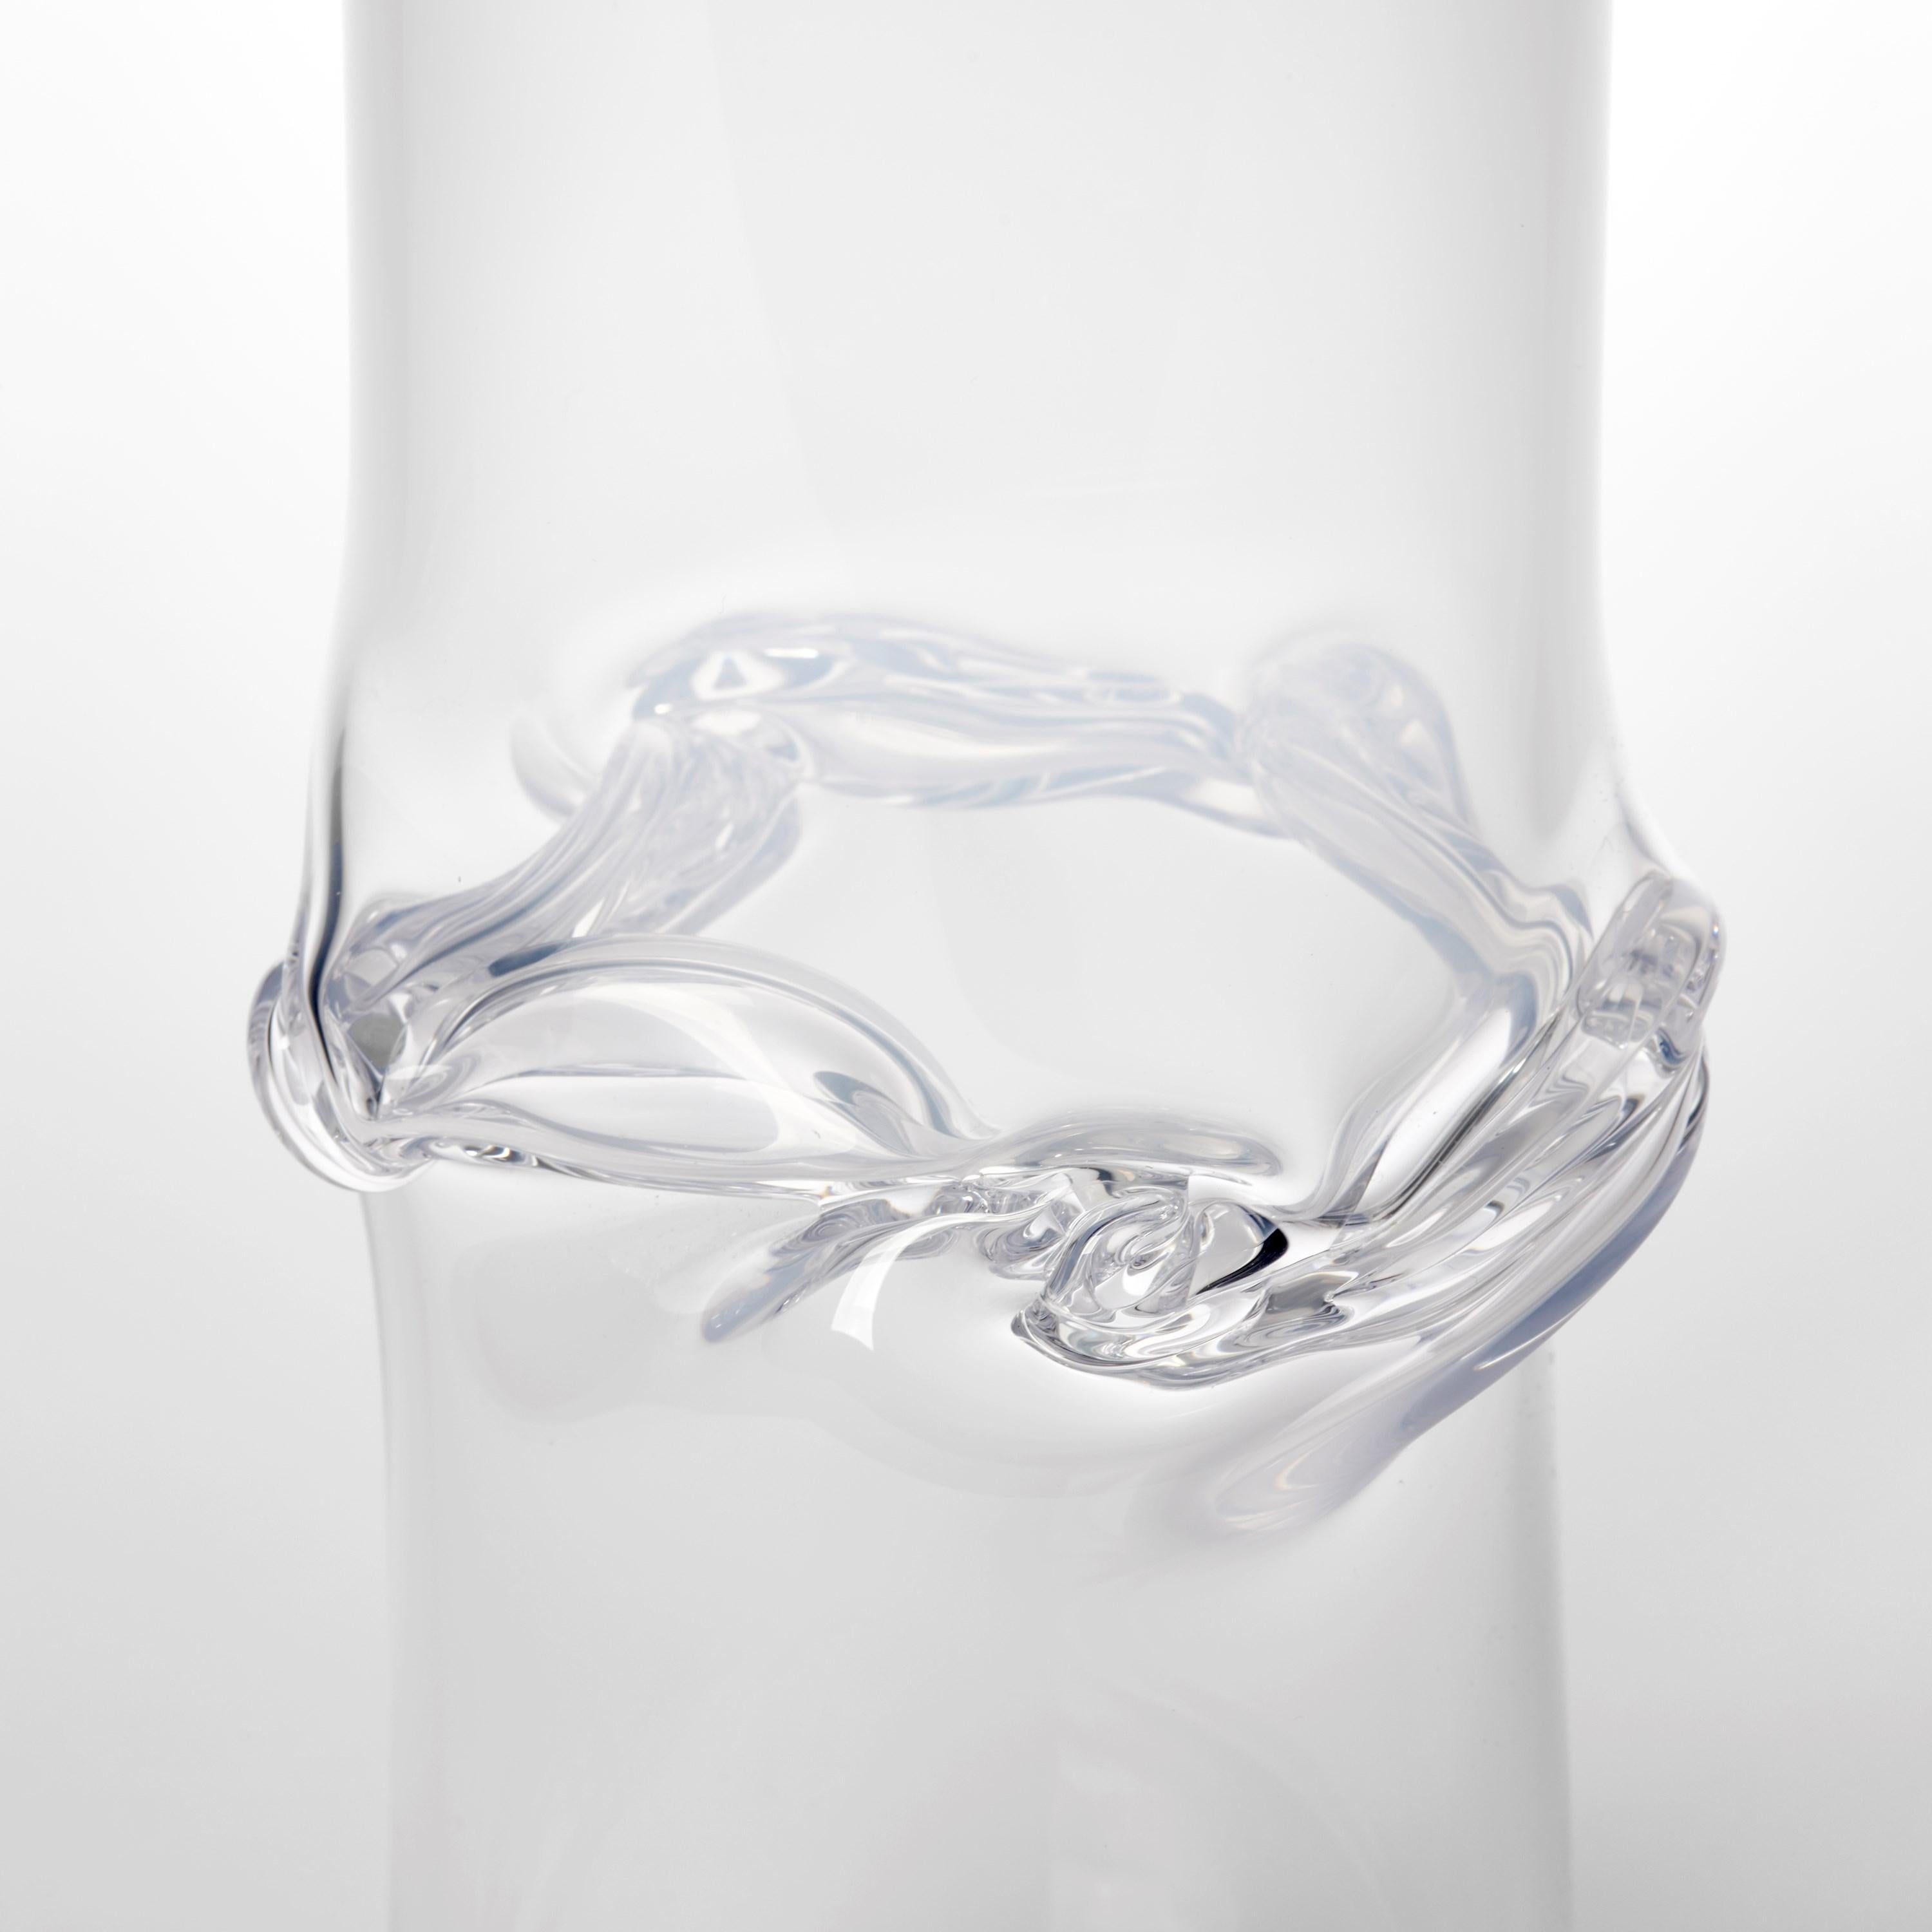 Organic Modern Torsion in Opal White 23/01, sculptural handblown glass vessel by Emma Baker For Sale